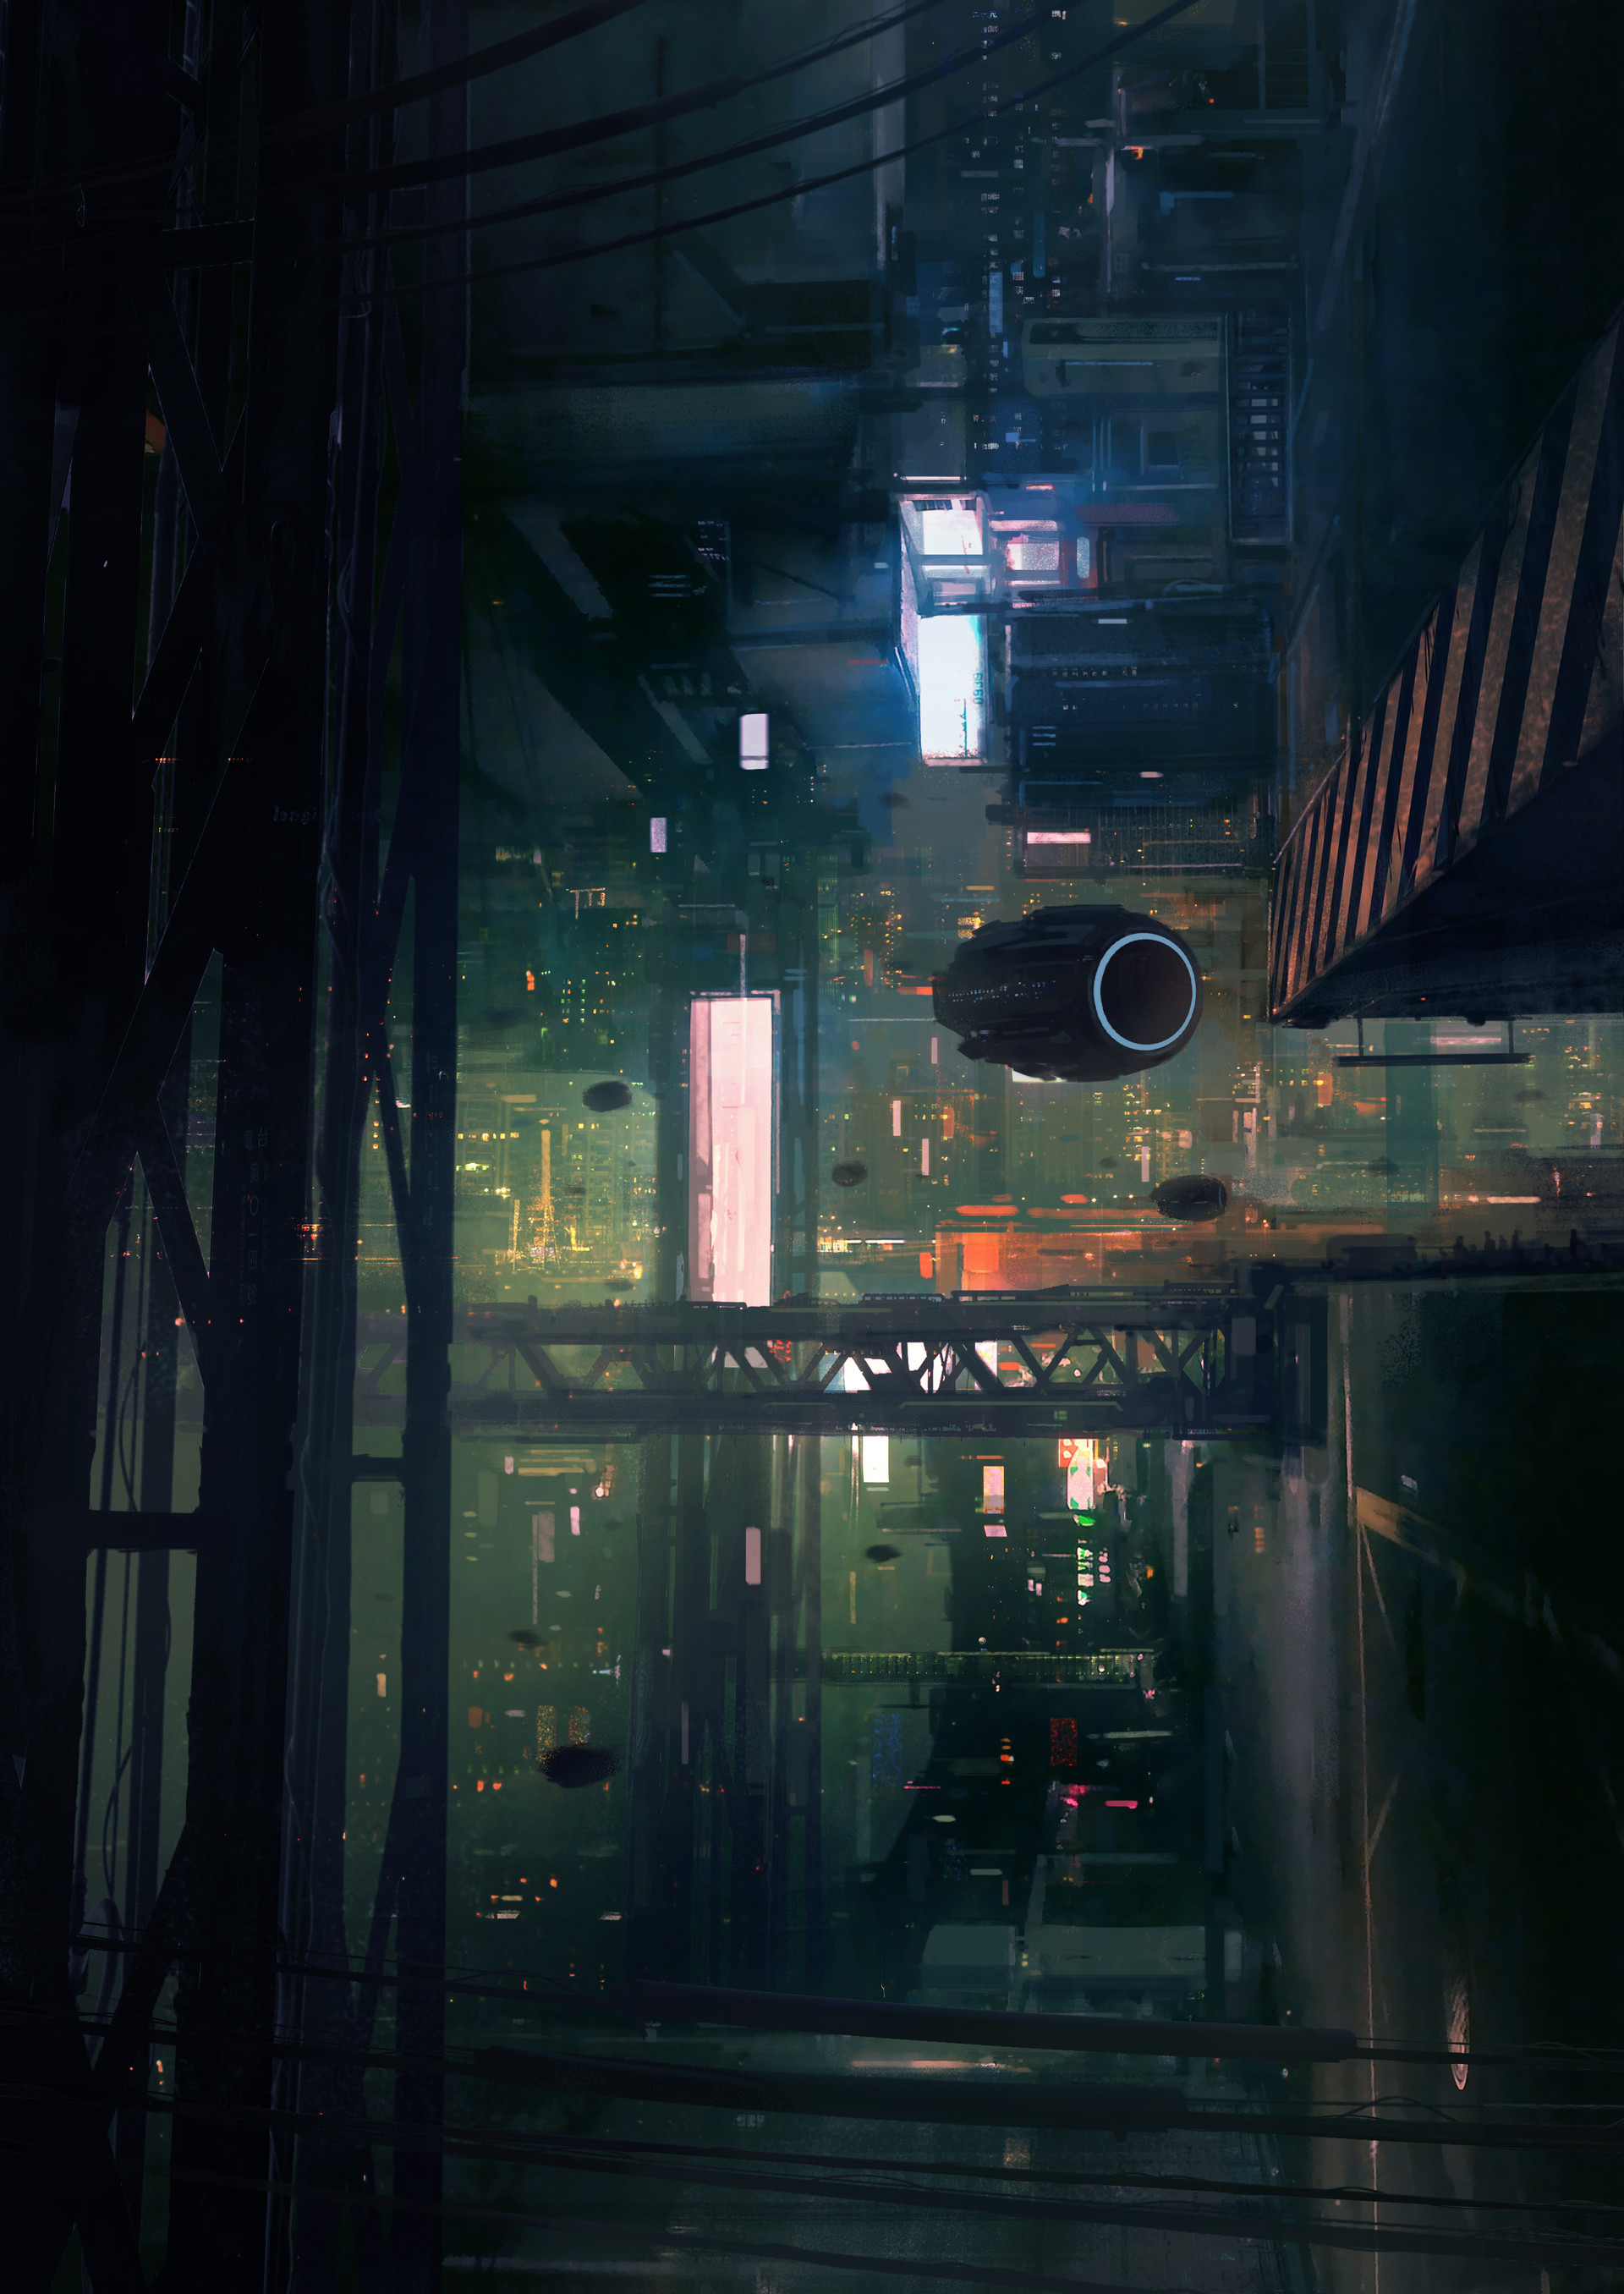 Cyberpunk City by Daniel Liang - l'artboratoire